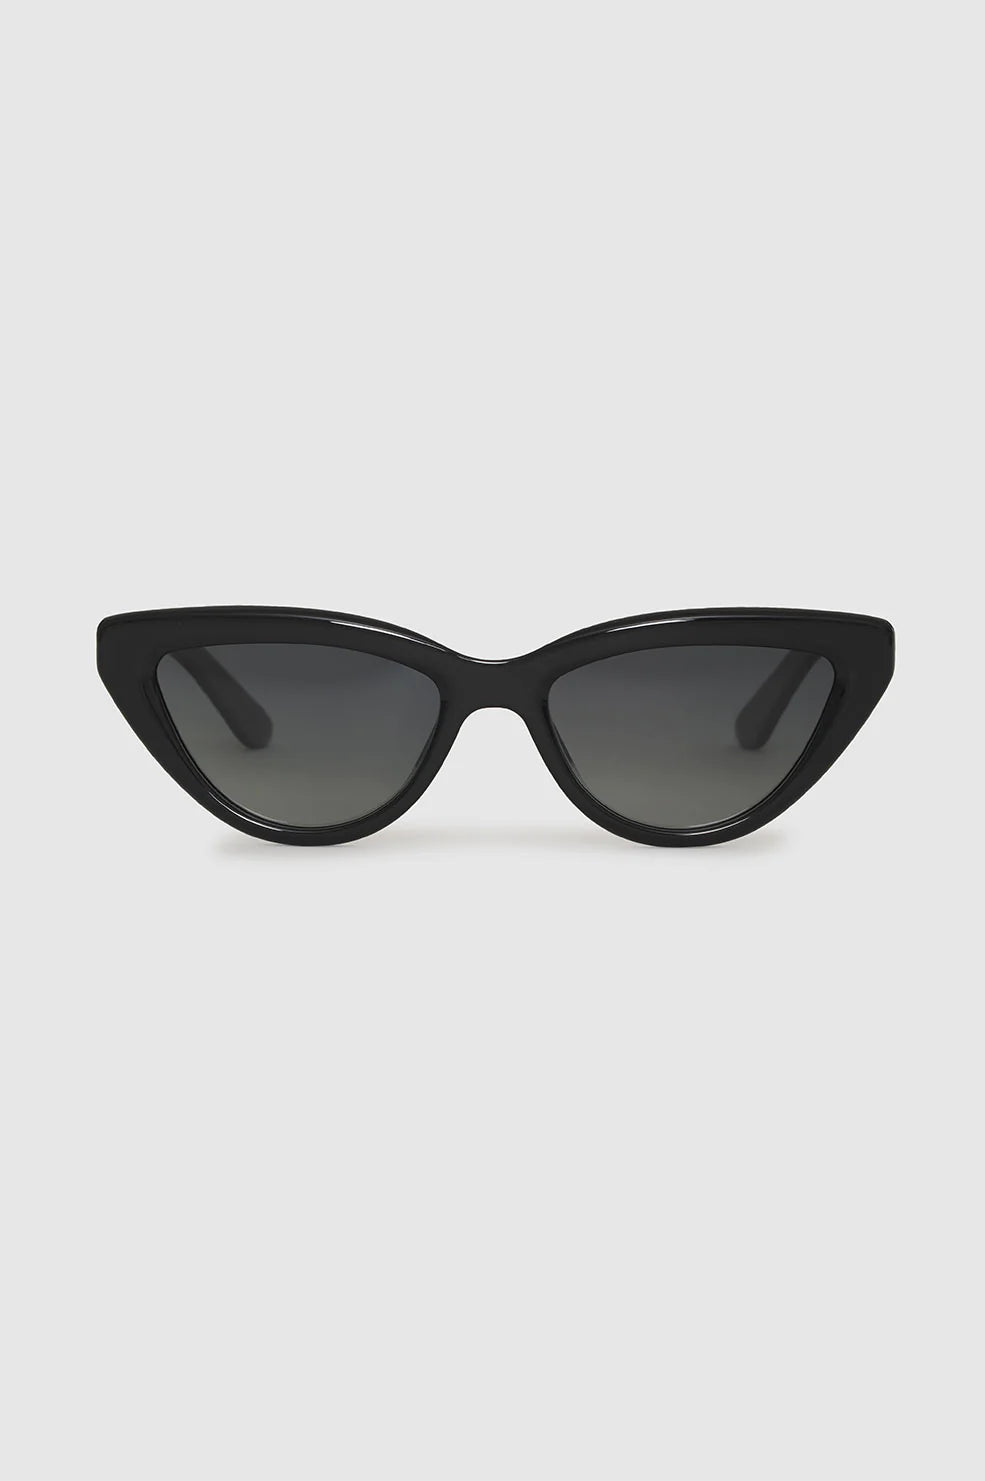 Anine Bing - Sedona Sunglasses - Black